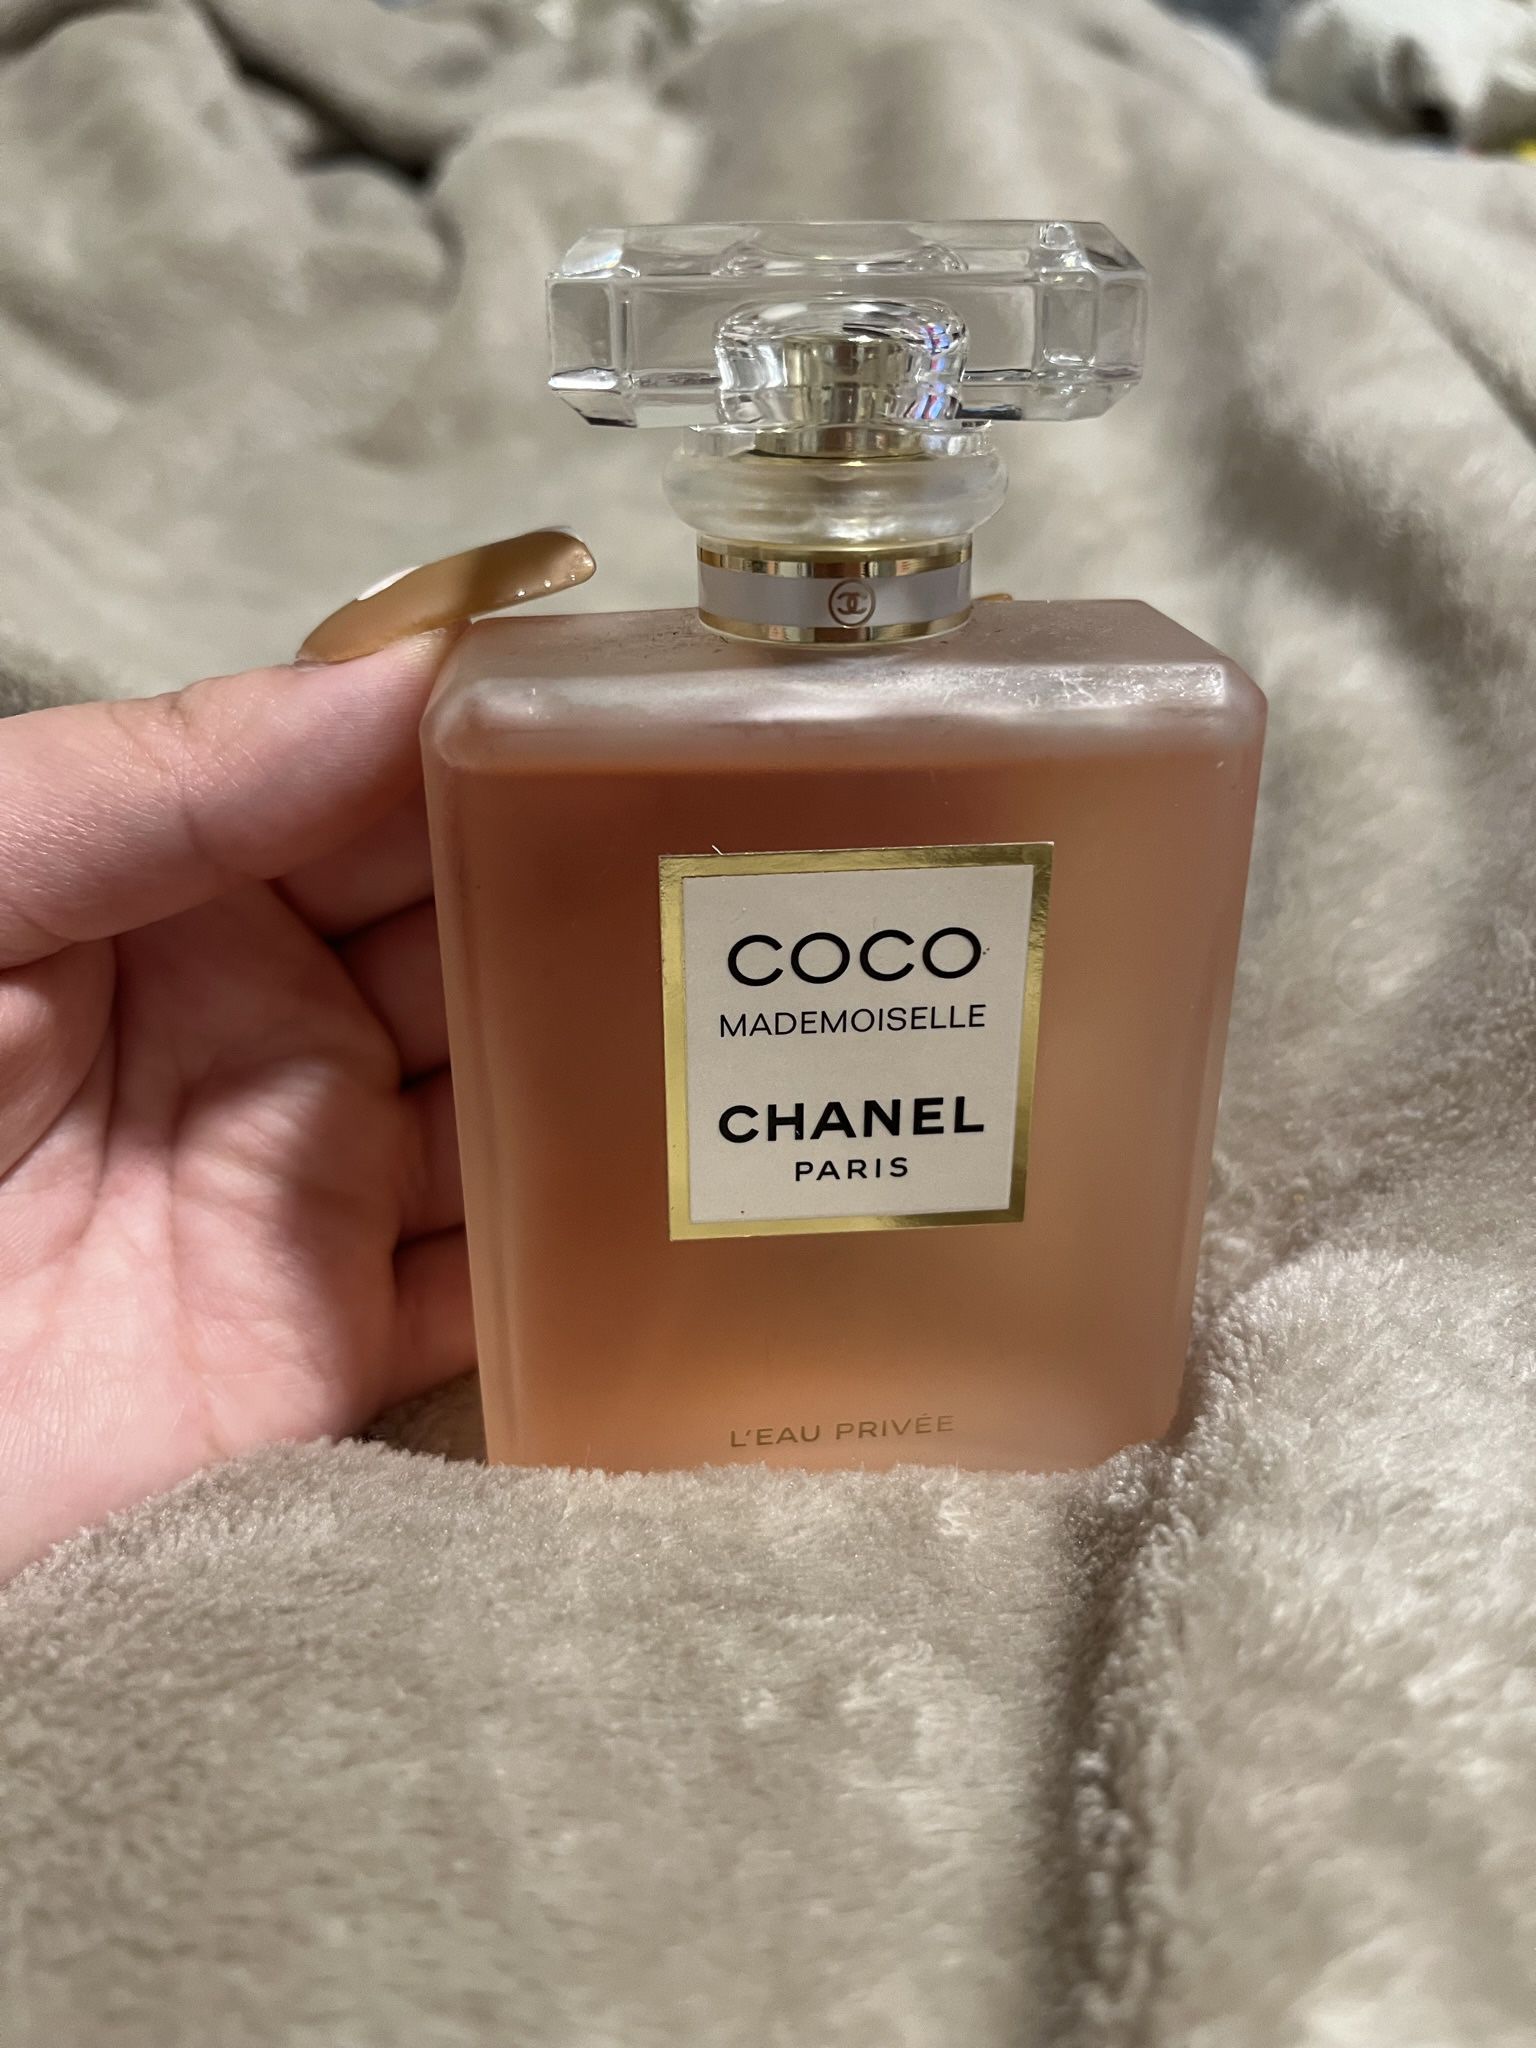 COCO Chanel Perfume 